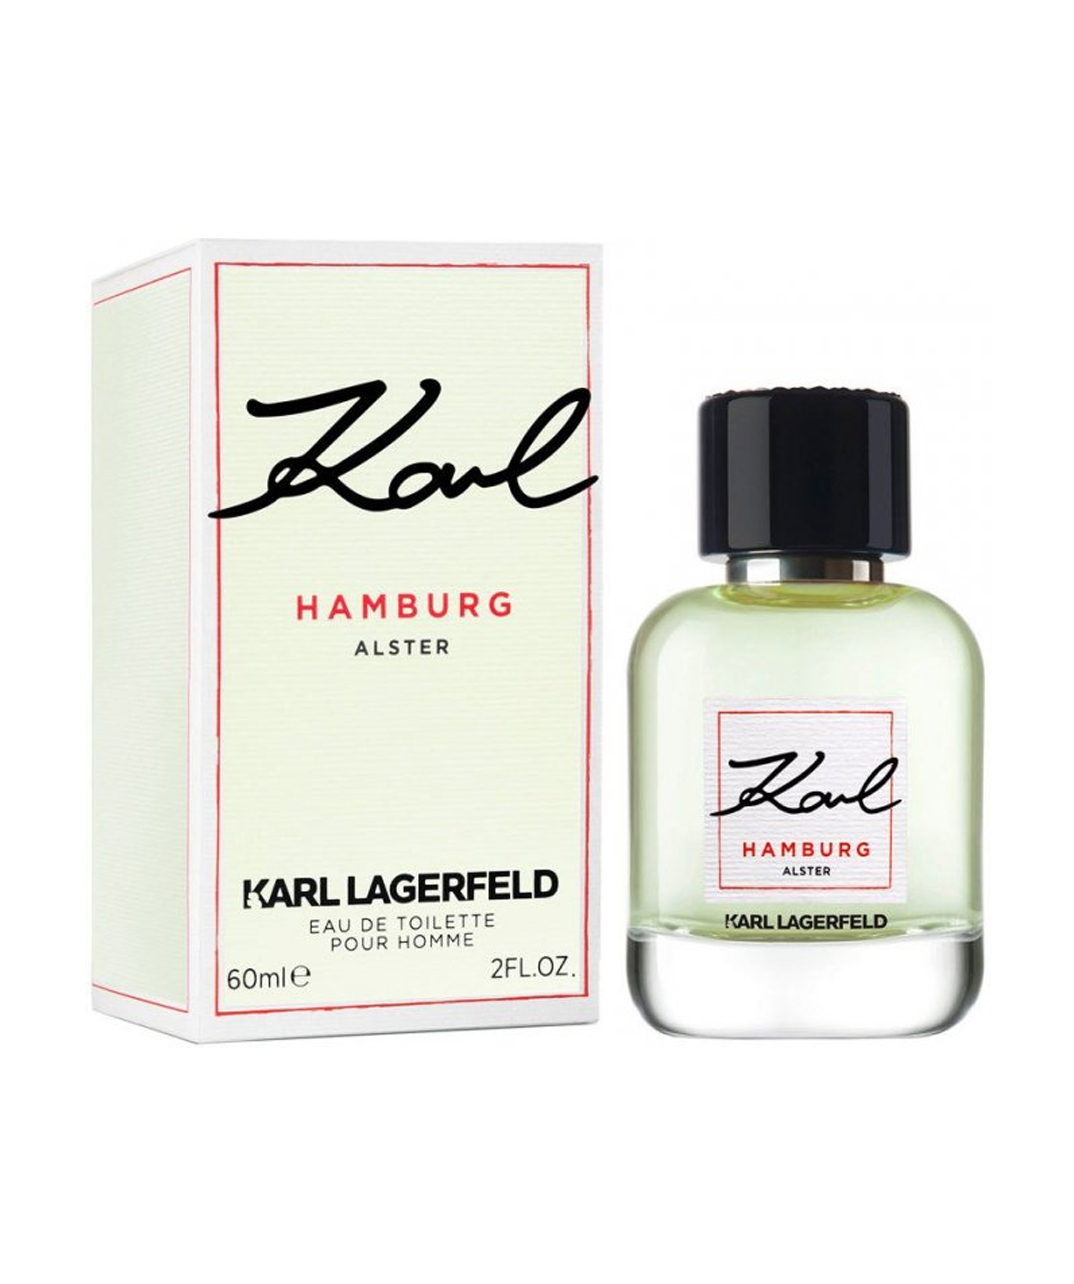 Парфюм «Karl Lagerfeld» Hamburg Alster, мужской, 60 мл